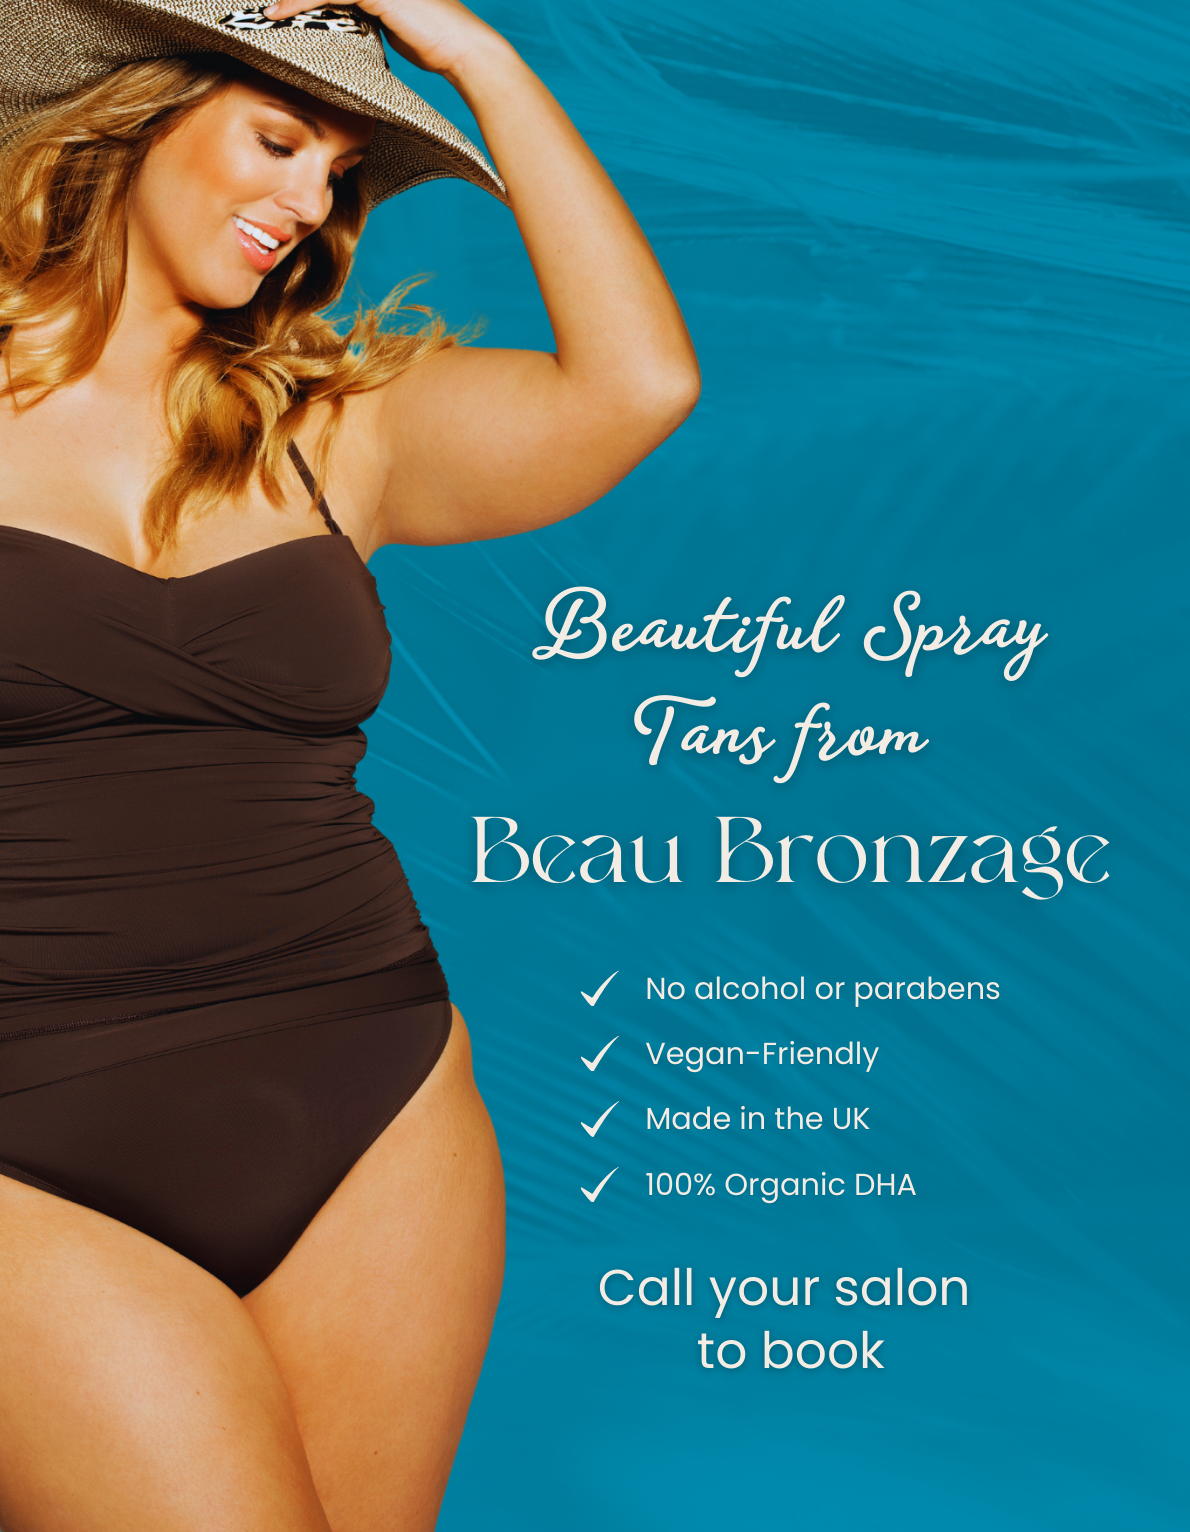 Beautiful spray tans from Beau Bronzage - vegan, organic and cruelty-free